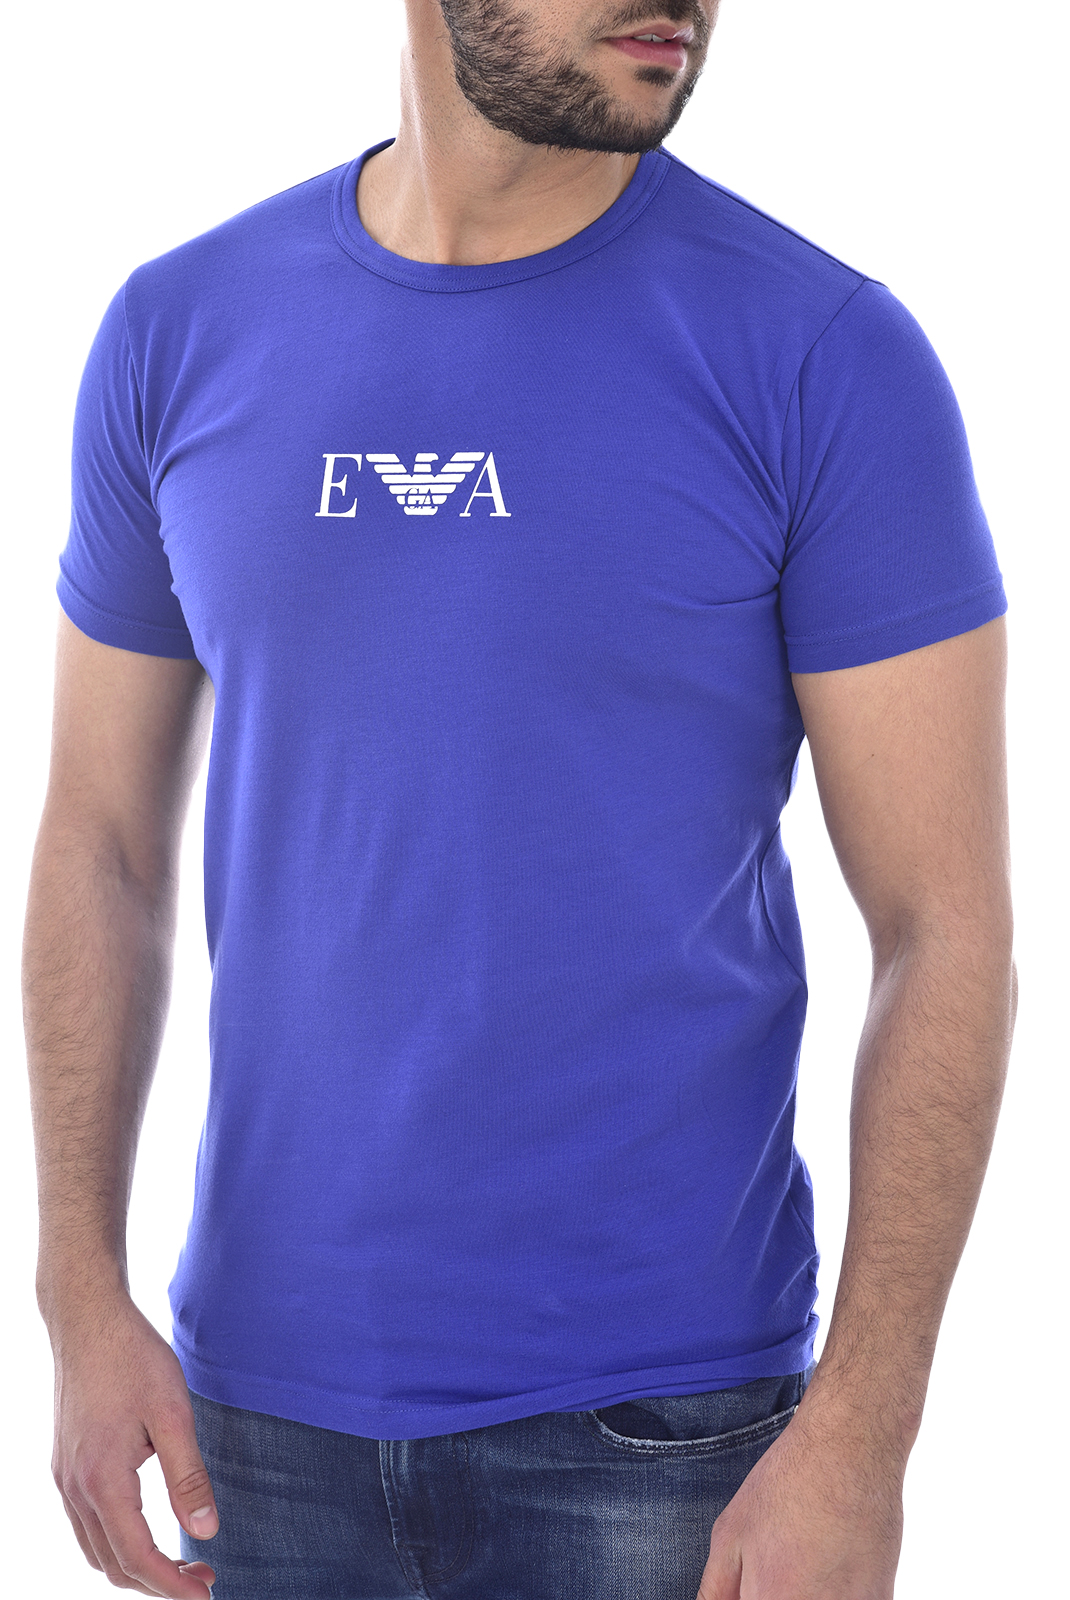 Tee-shirt Bleu Elet 111267 Cc715 Emporio Armani